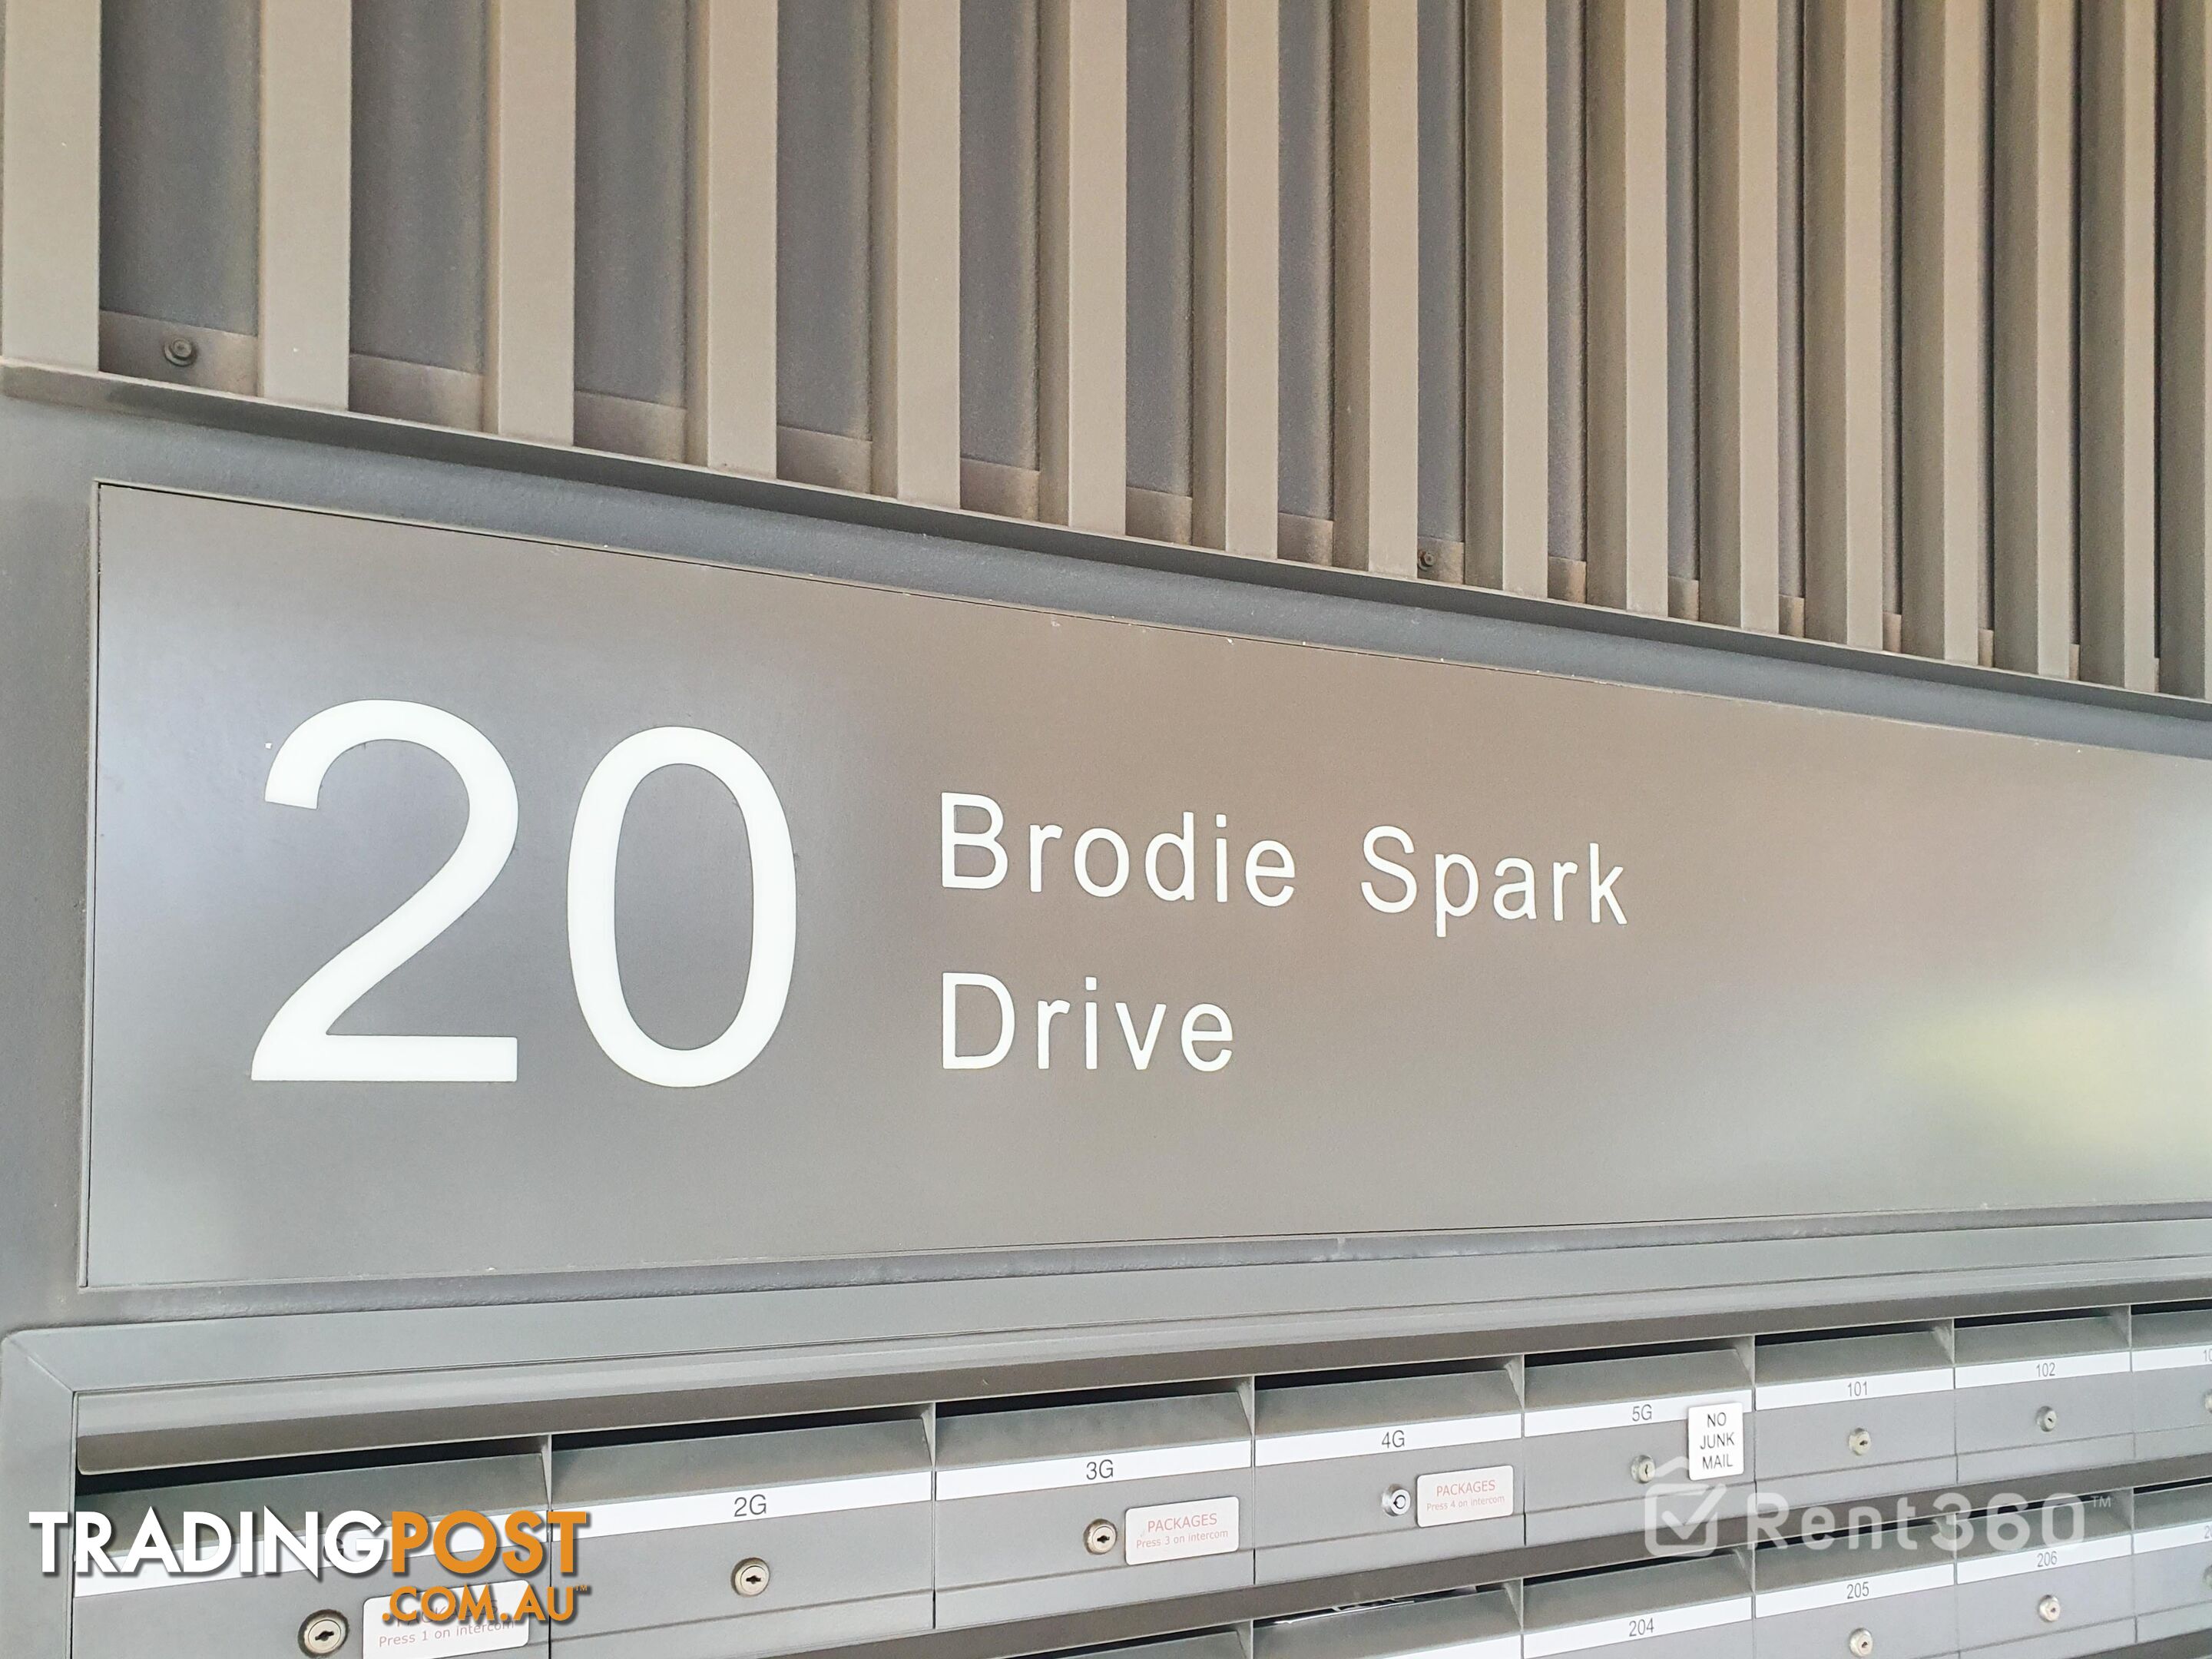 701 20 Brodie Spark Drive WOLLI CREEK NSW 2205